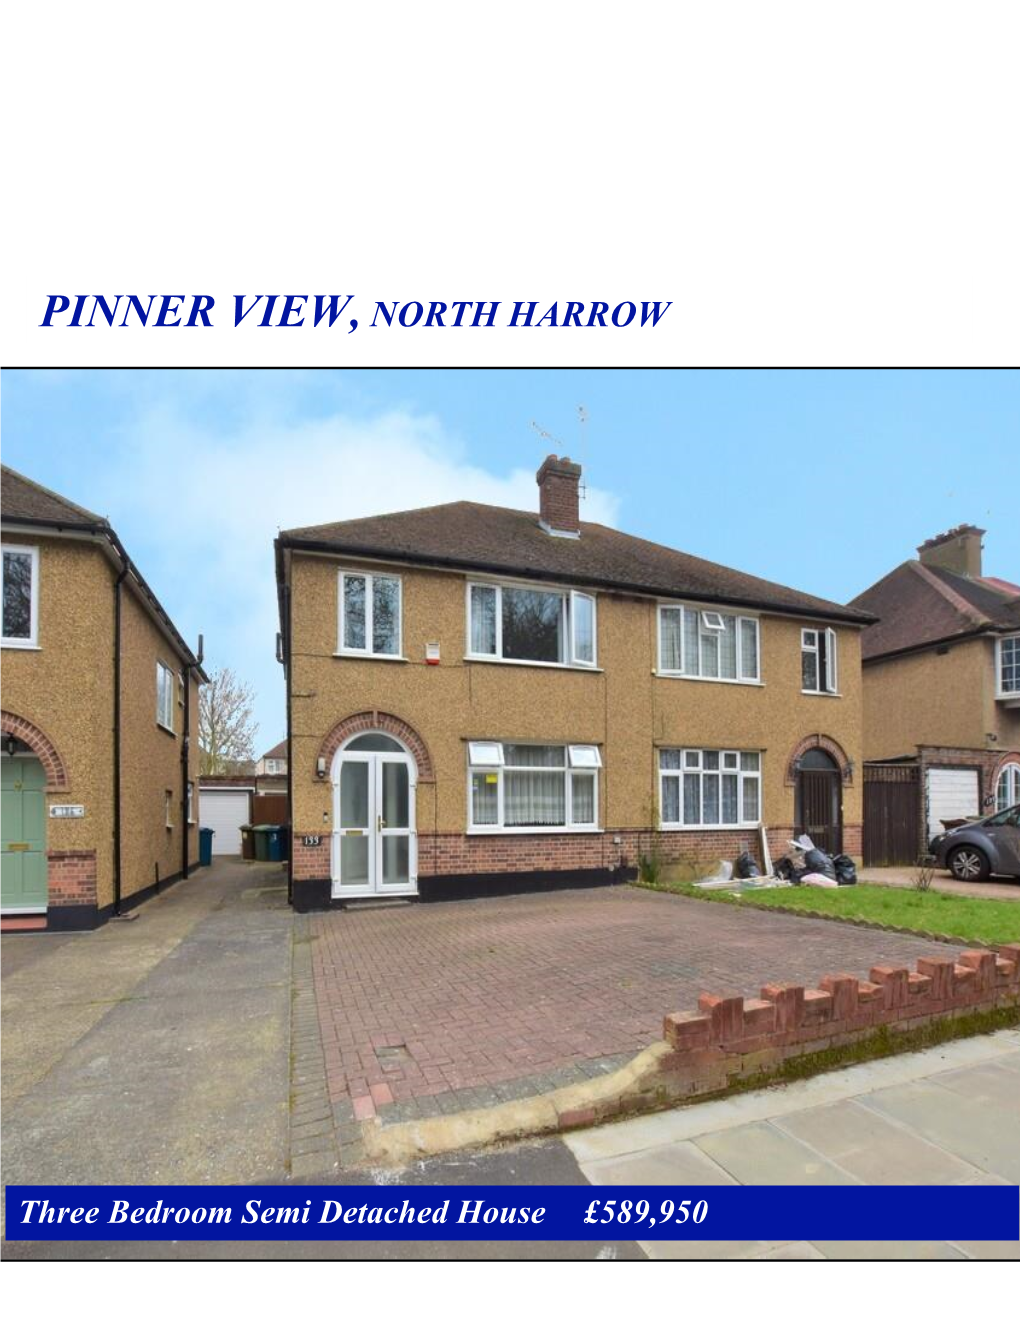 Pinner View, North Harrow